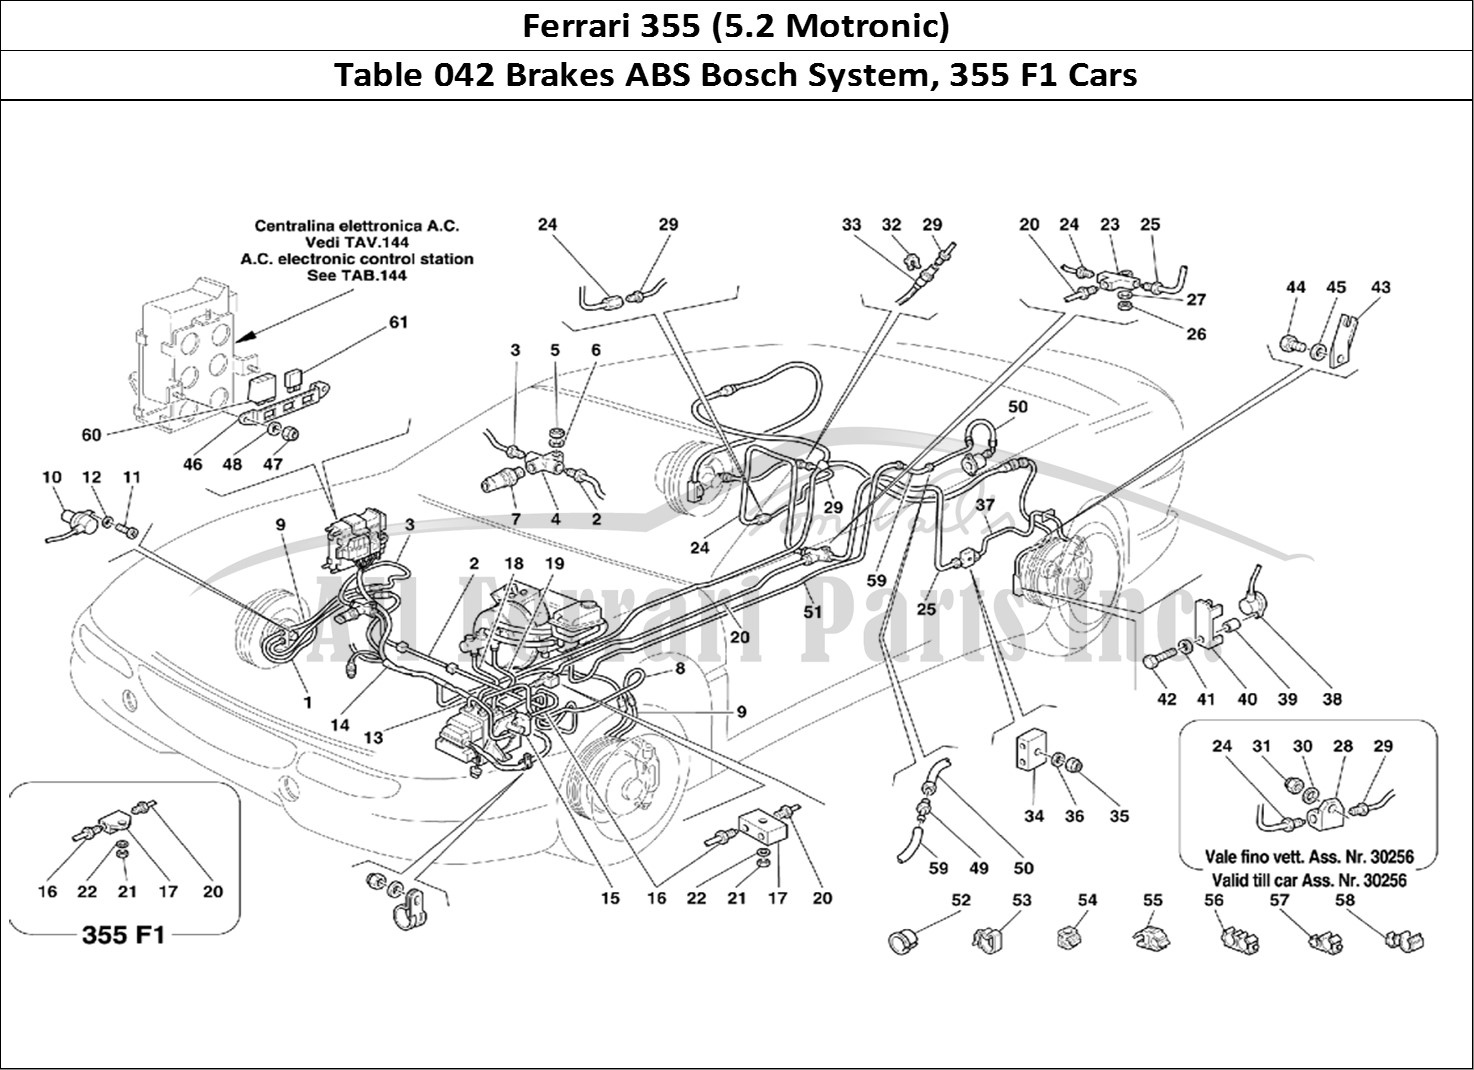 Ferrari Parts Ferrari 355 (5.2 Motronic) Page 042 ABS Bosch Brake System -V